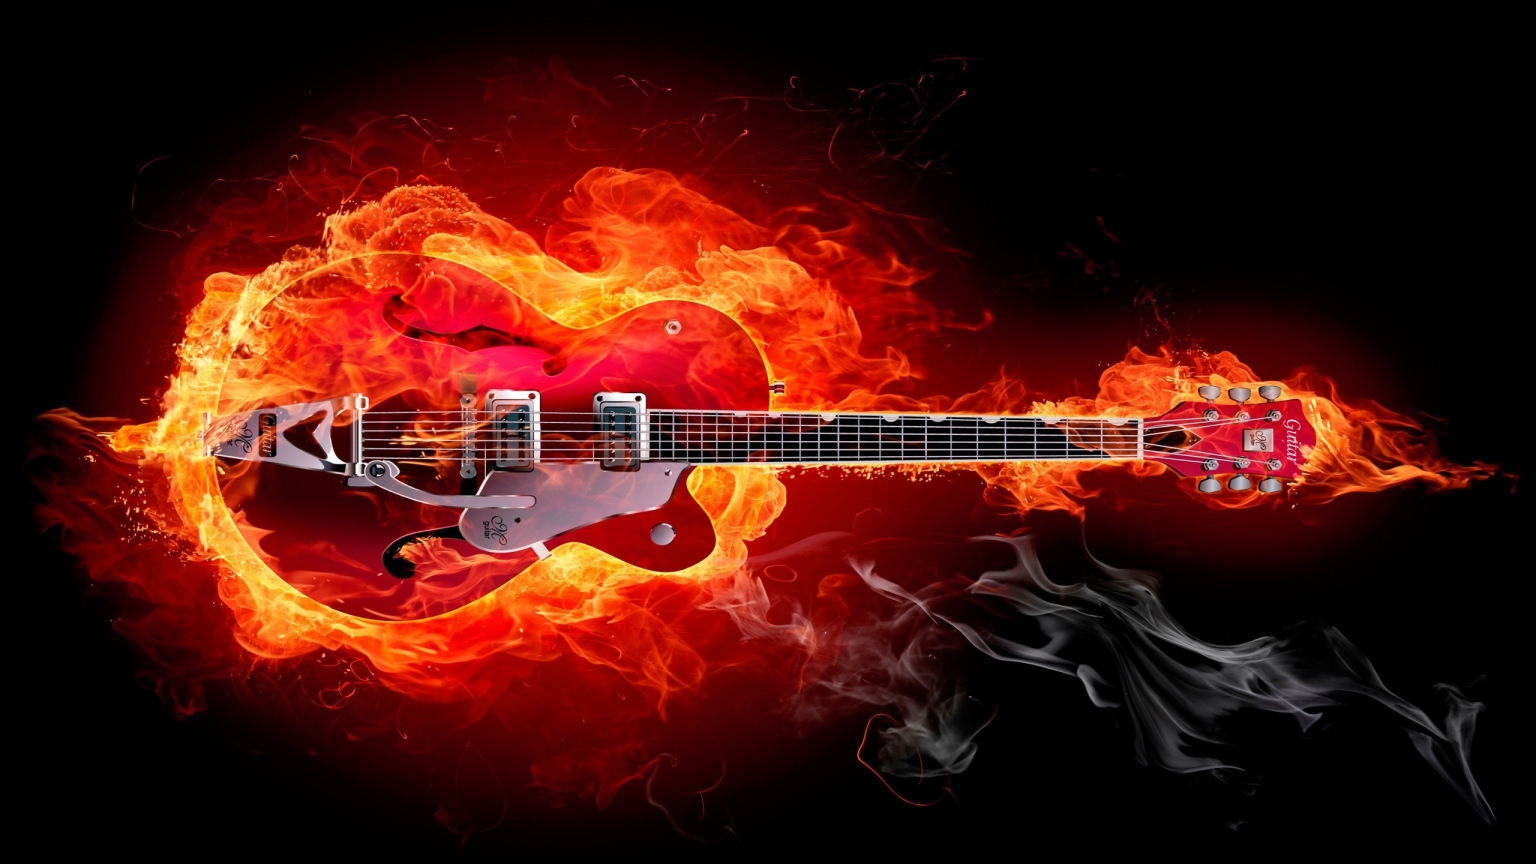 Fire Guitar for 1536 x 864 HDTV resolution